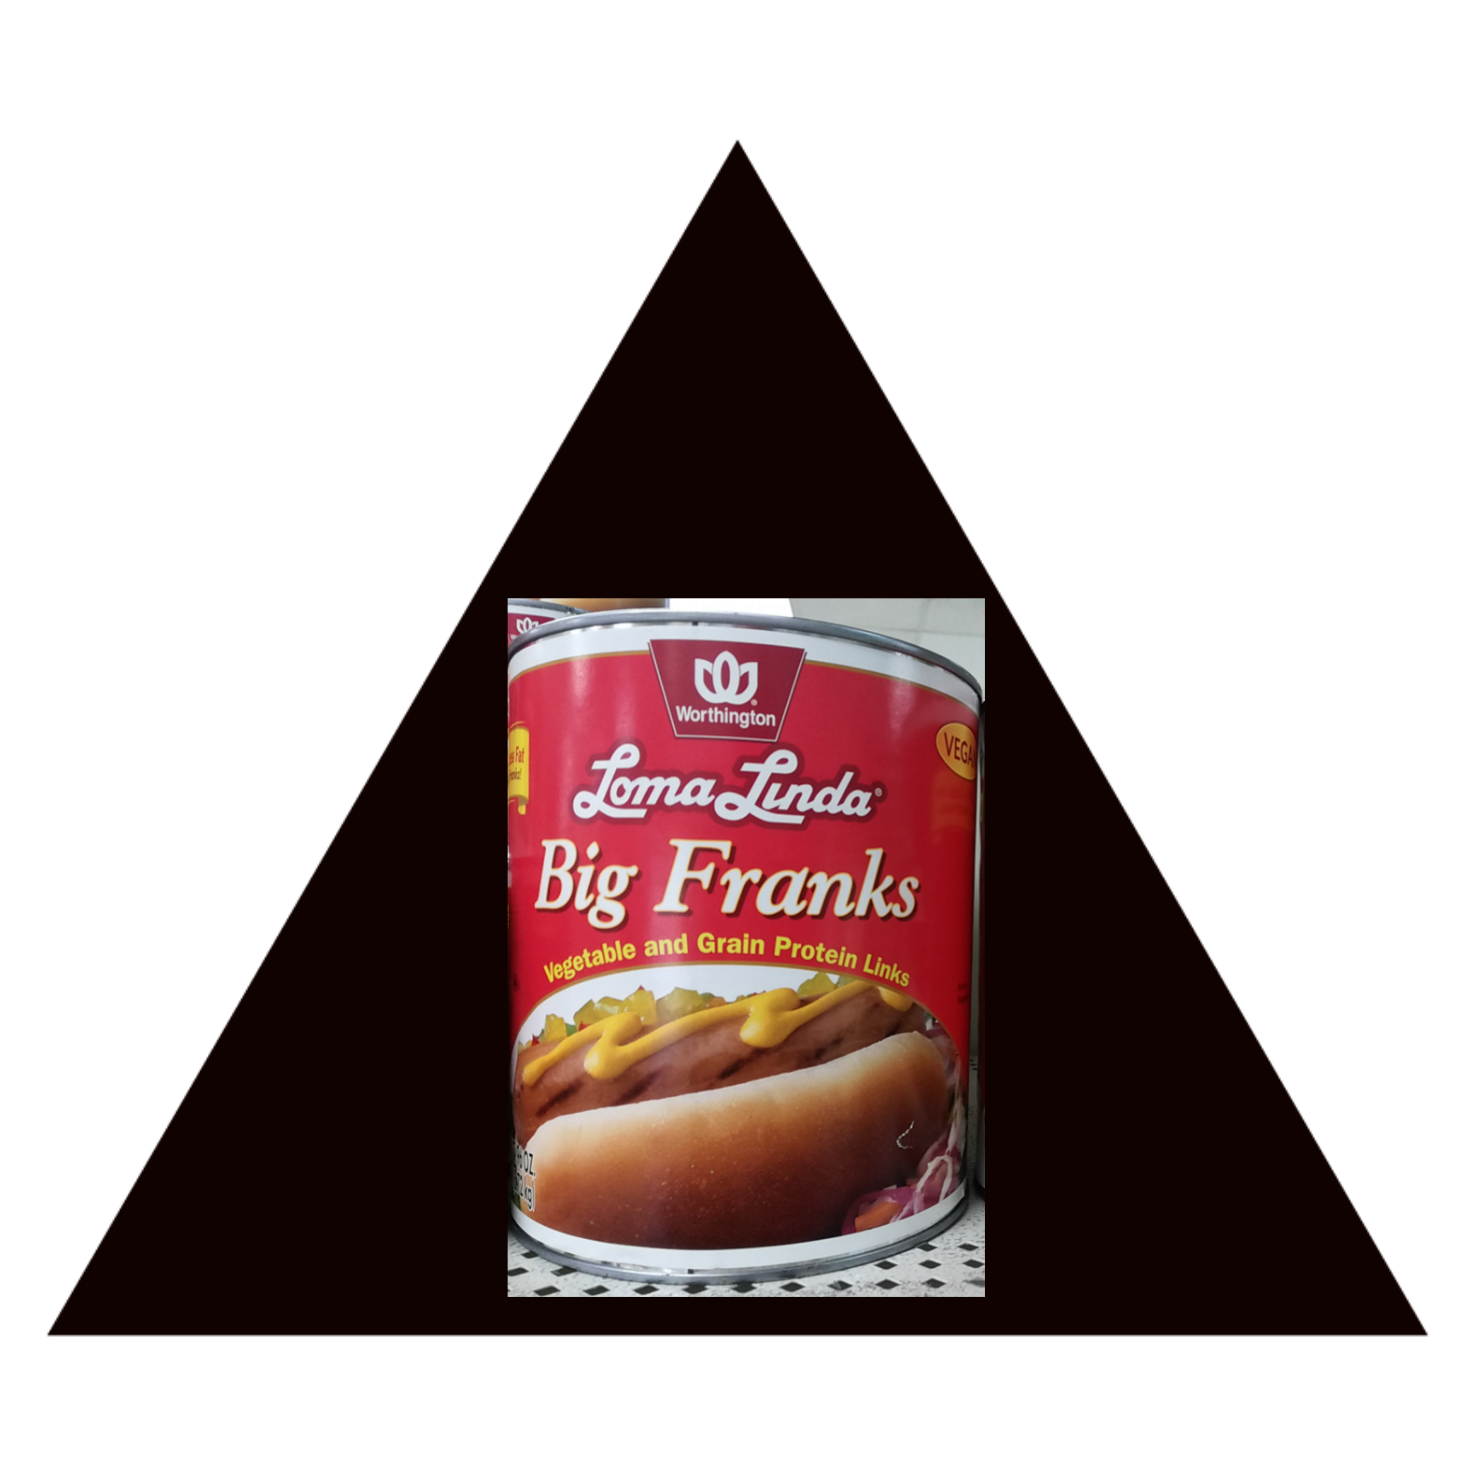 Loma Linda promotes food pyramid made up entirely of Big Franks